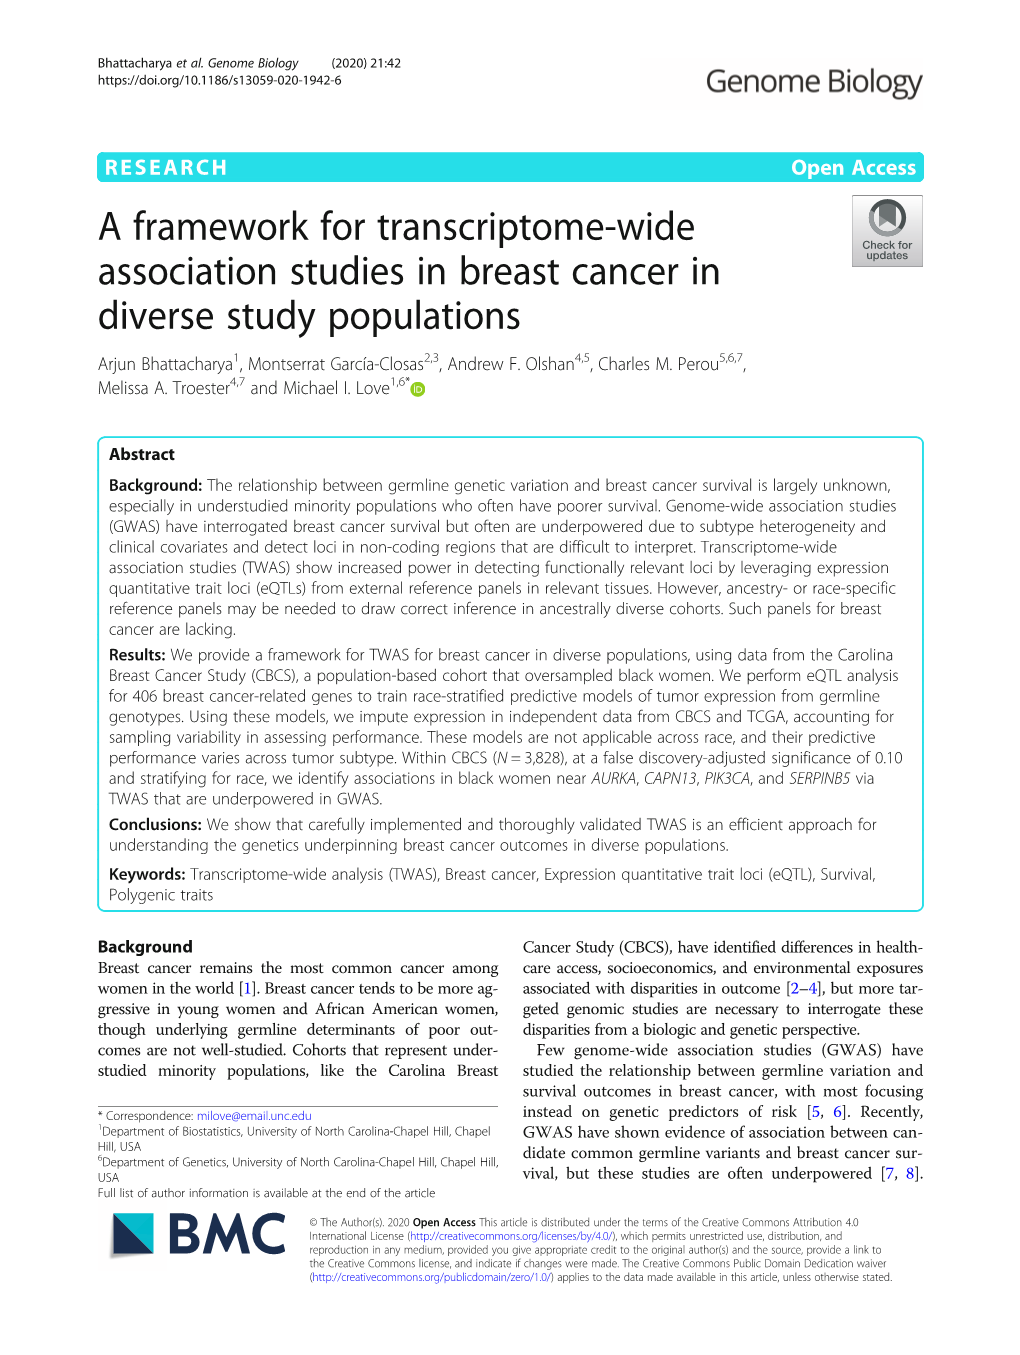 A Framework for Transcriptome-Wide Association Studies in Breast Cancer in Diverse Study Populations Arjun Bhattacharya1, Montserrat García-Closas2,3, Andrew F